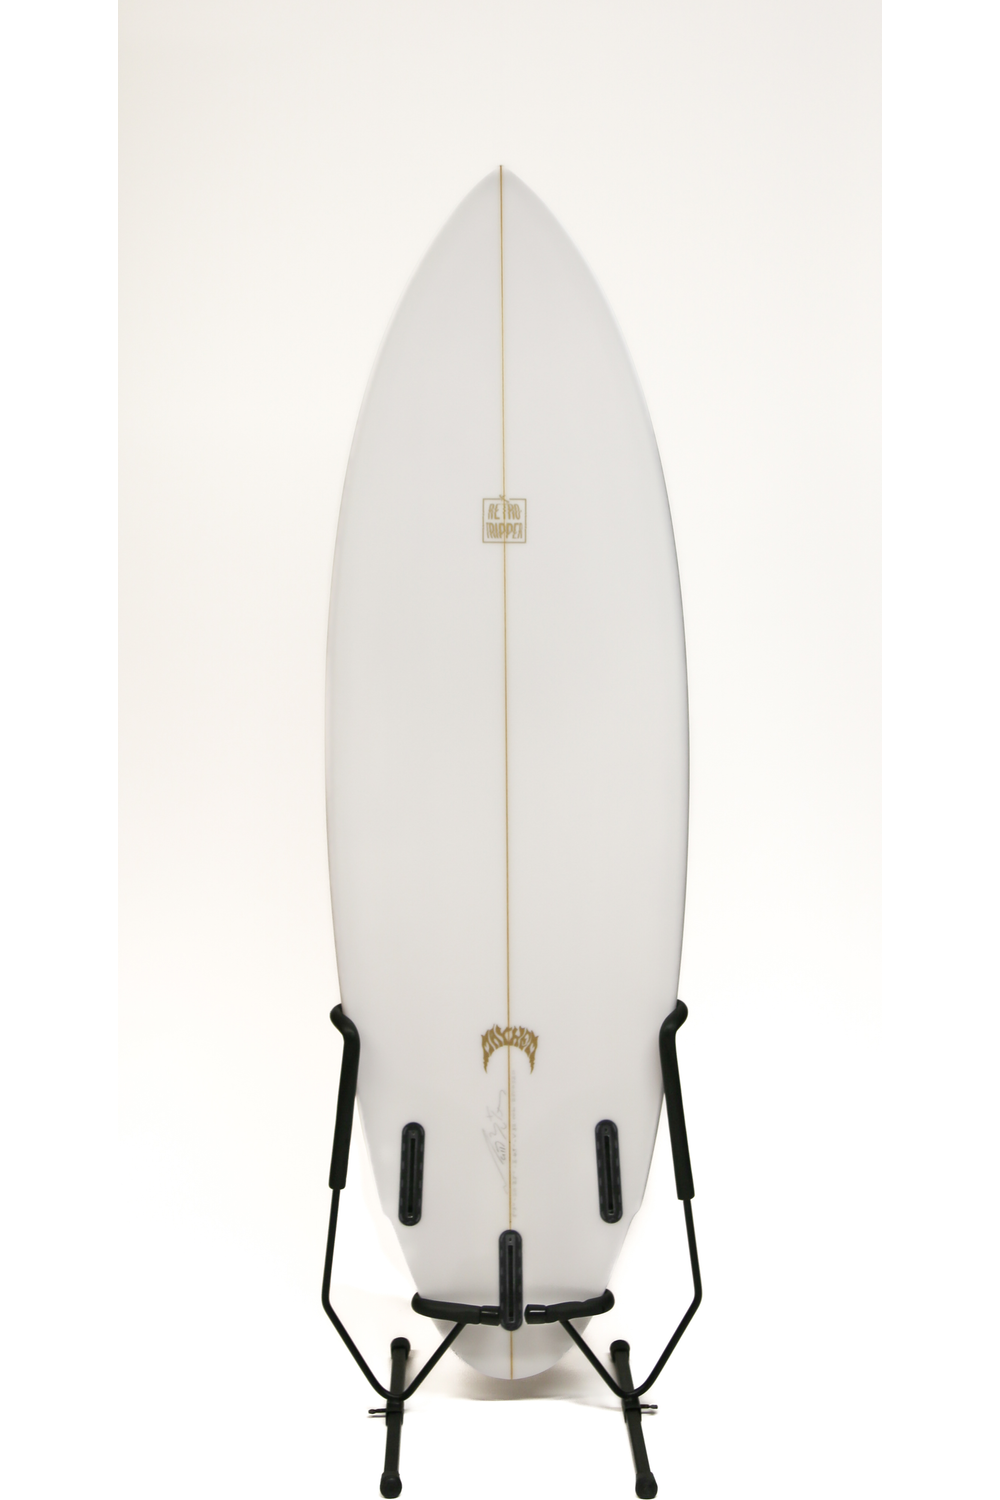 Lost Retro Tripper, 5'9 Surfboard 32.00L PU Futures 3 Fins